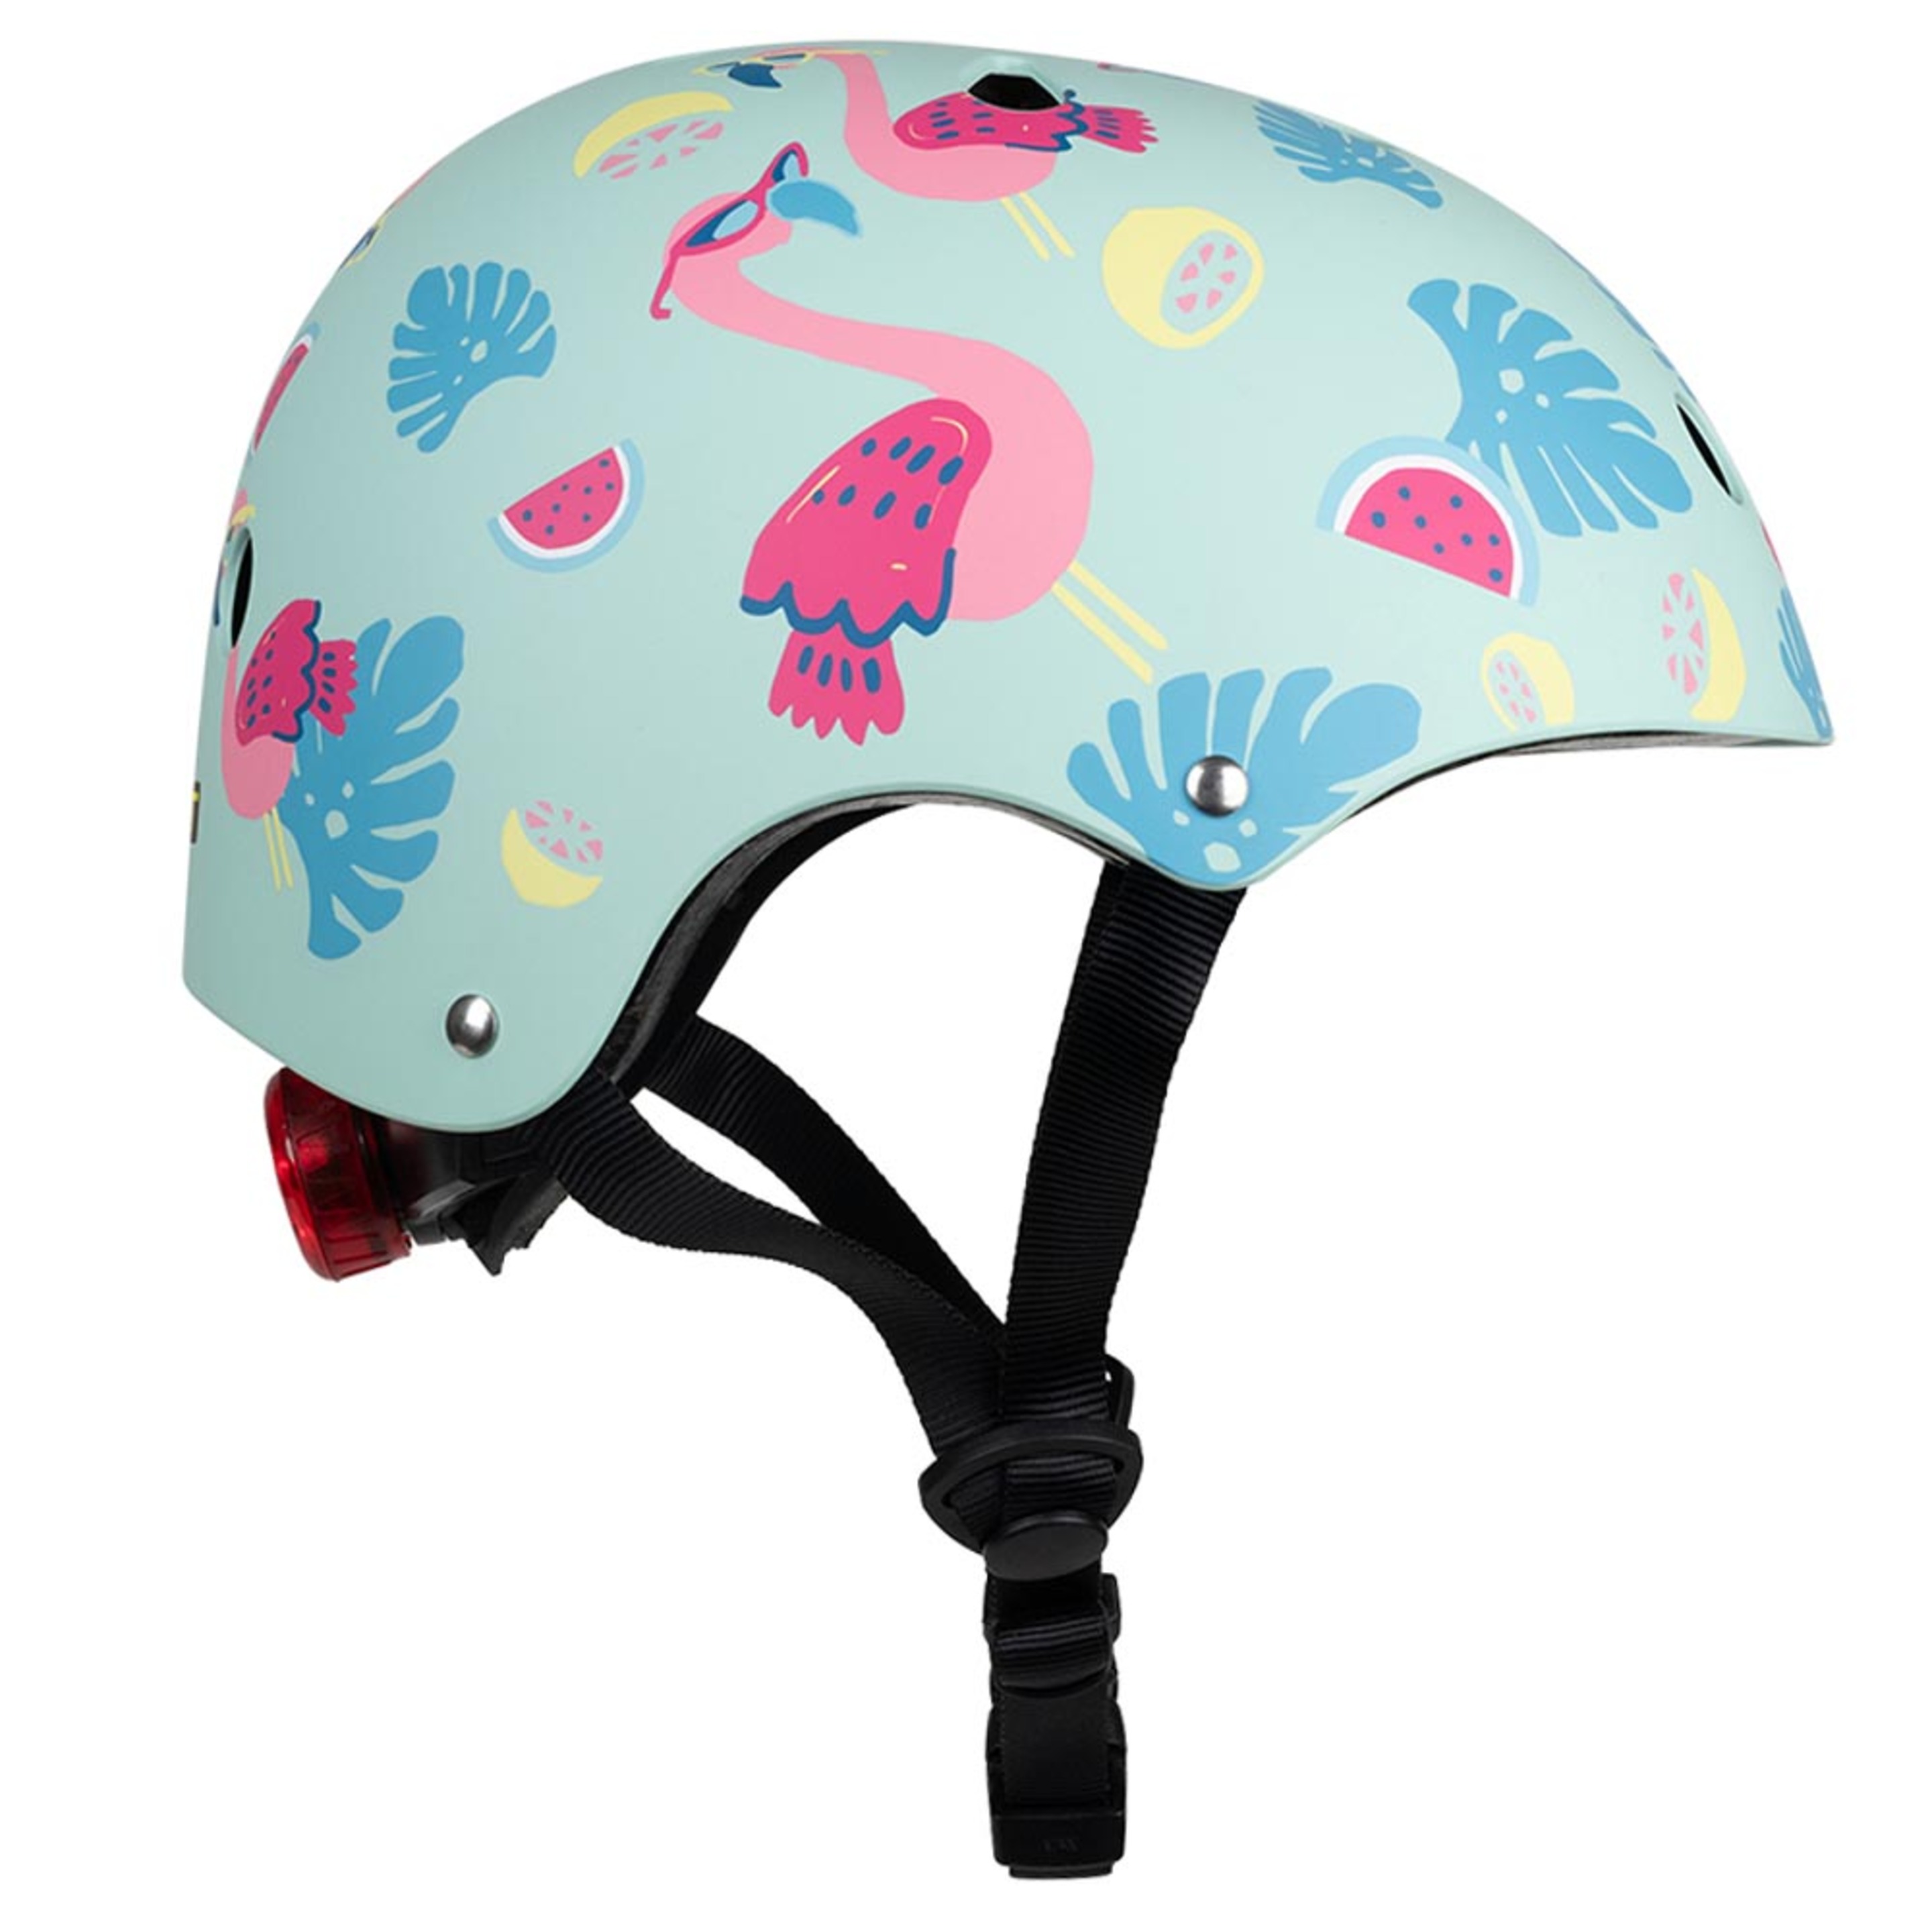 Mini Capacete De Bicicleta Hornit Lids Flamingo - Animal Print - O capacete mais fixe do mundo! | Sport Zone MKP